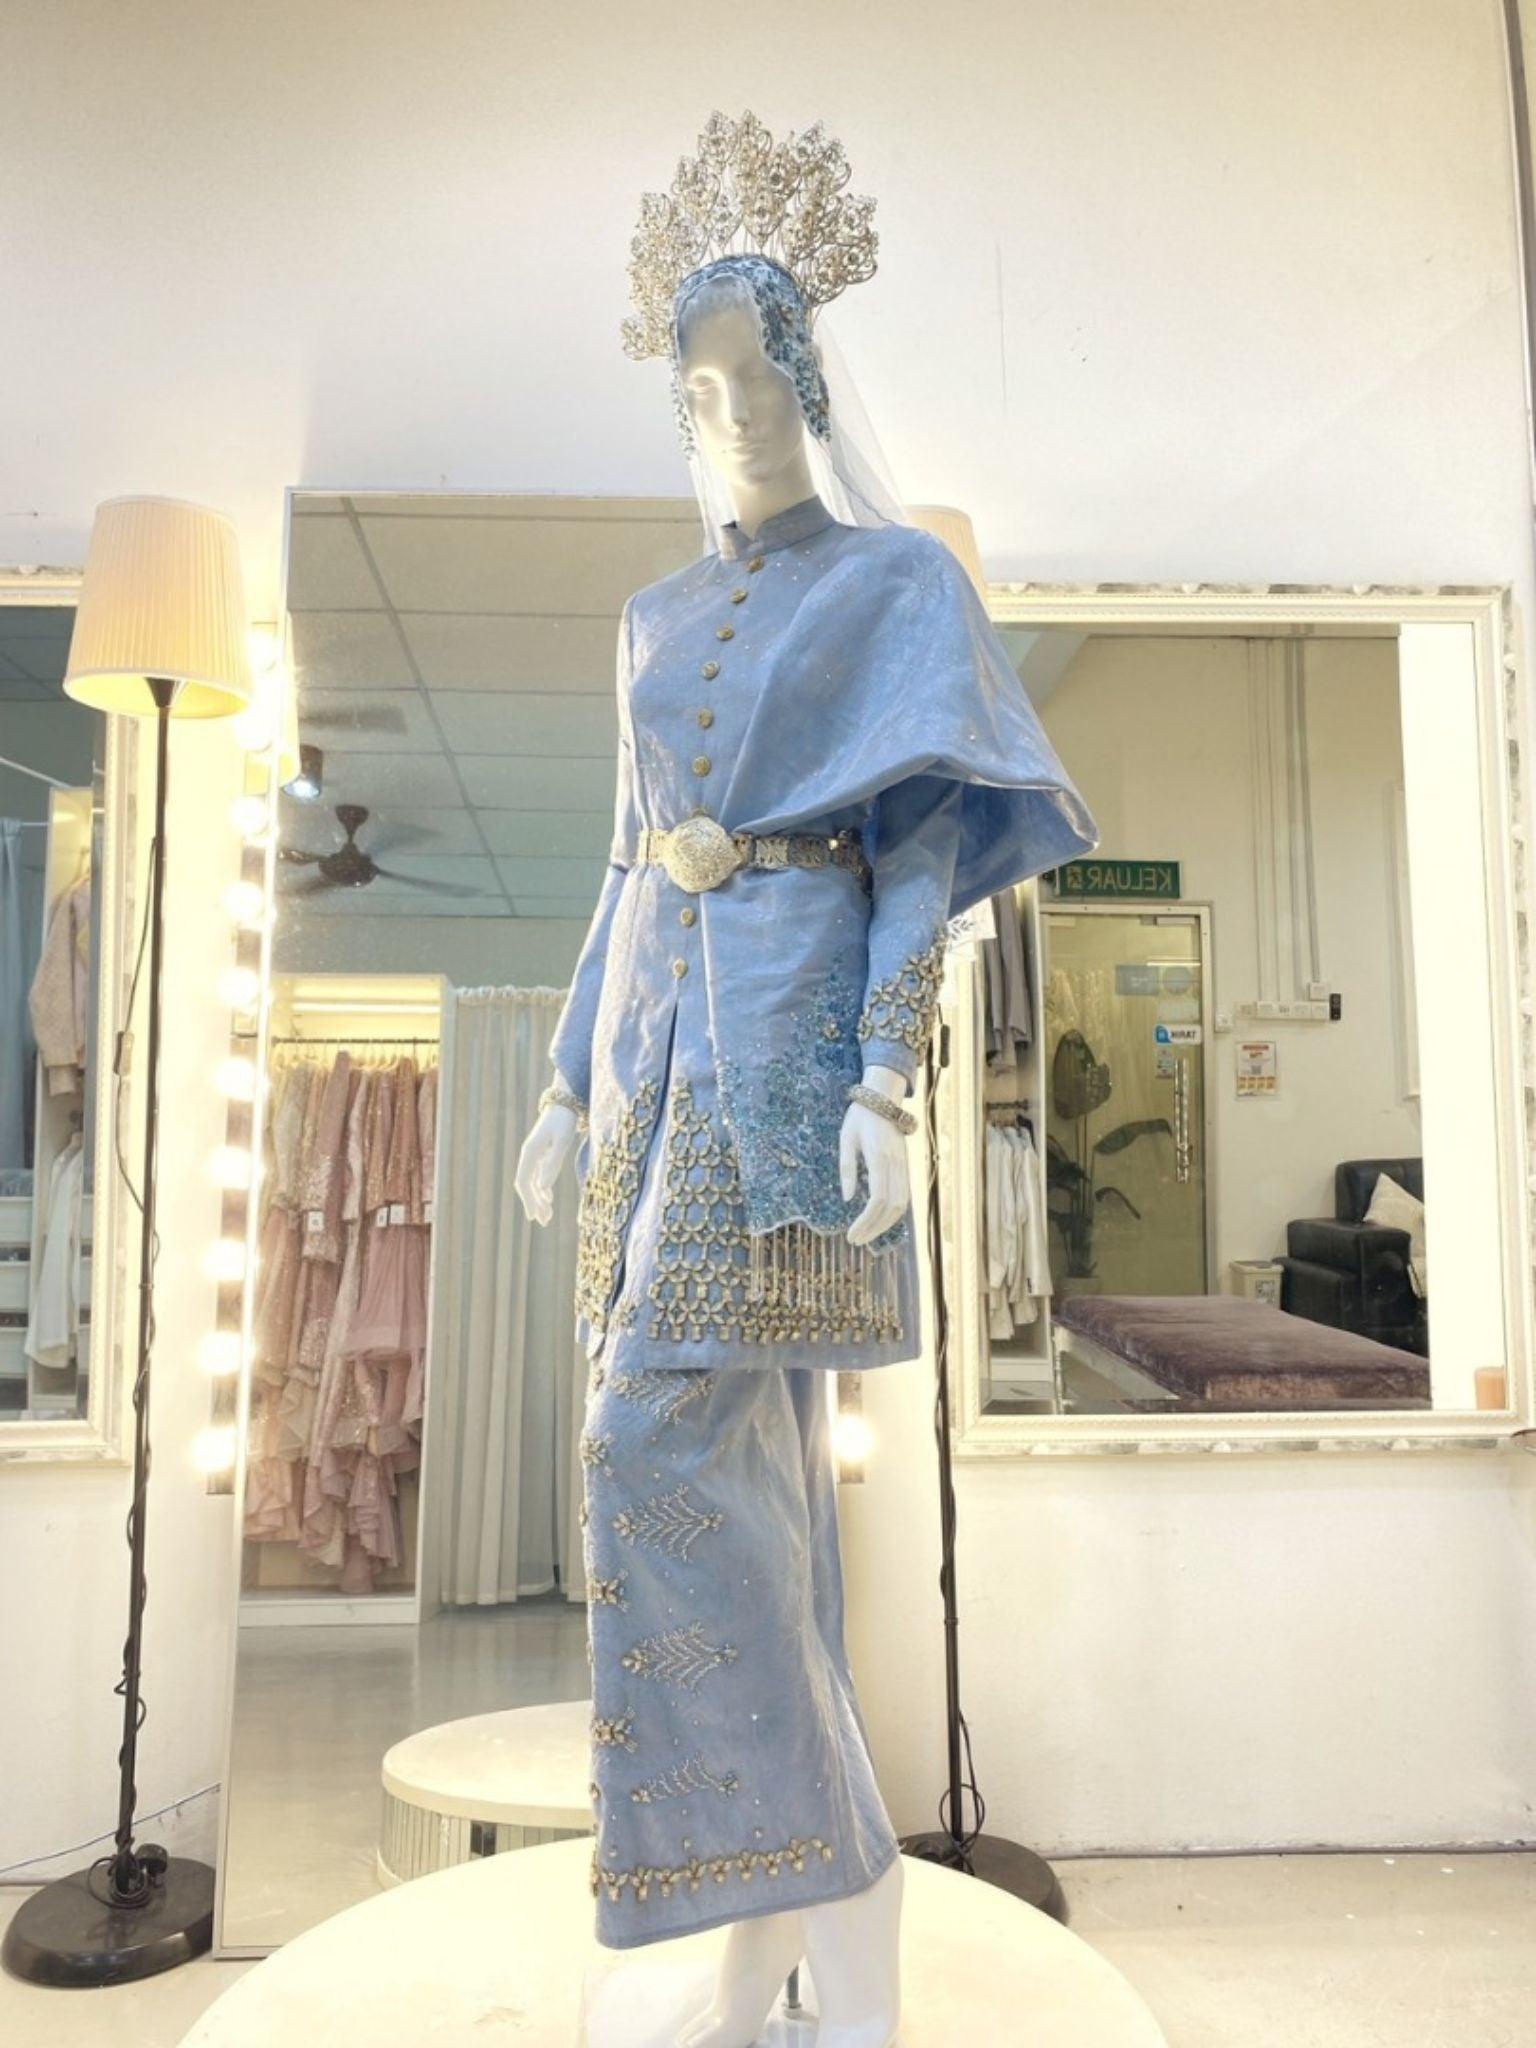 KENCANA - Baju Kurung Belah Songket Wedding Dress, Icy Blue and Silver from PP Signature Bridal Boutique. Tempah Baju Pengantin online-sewa baju pengantin